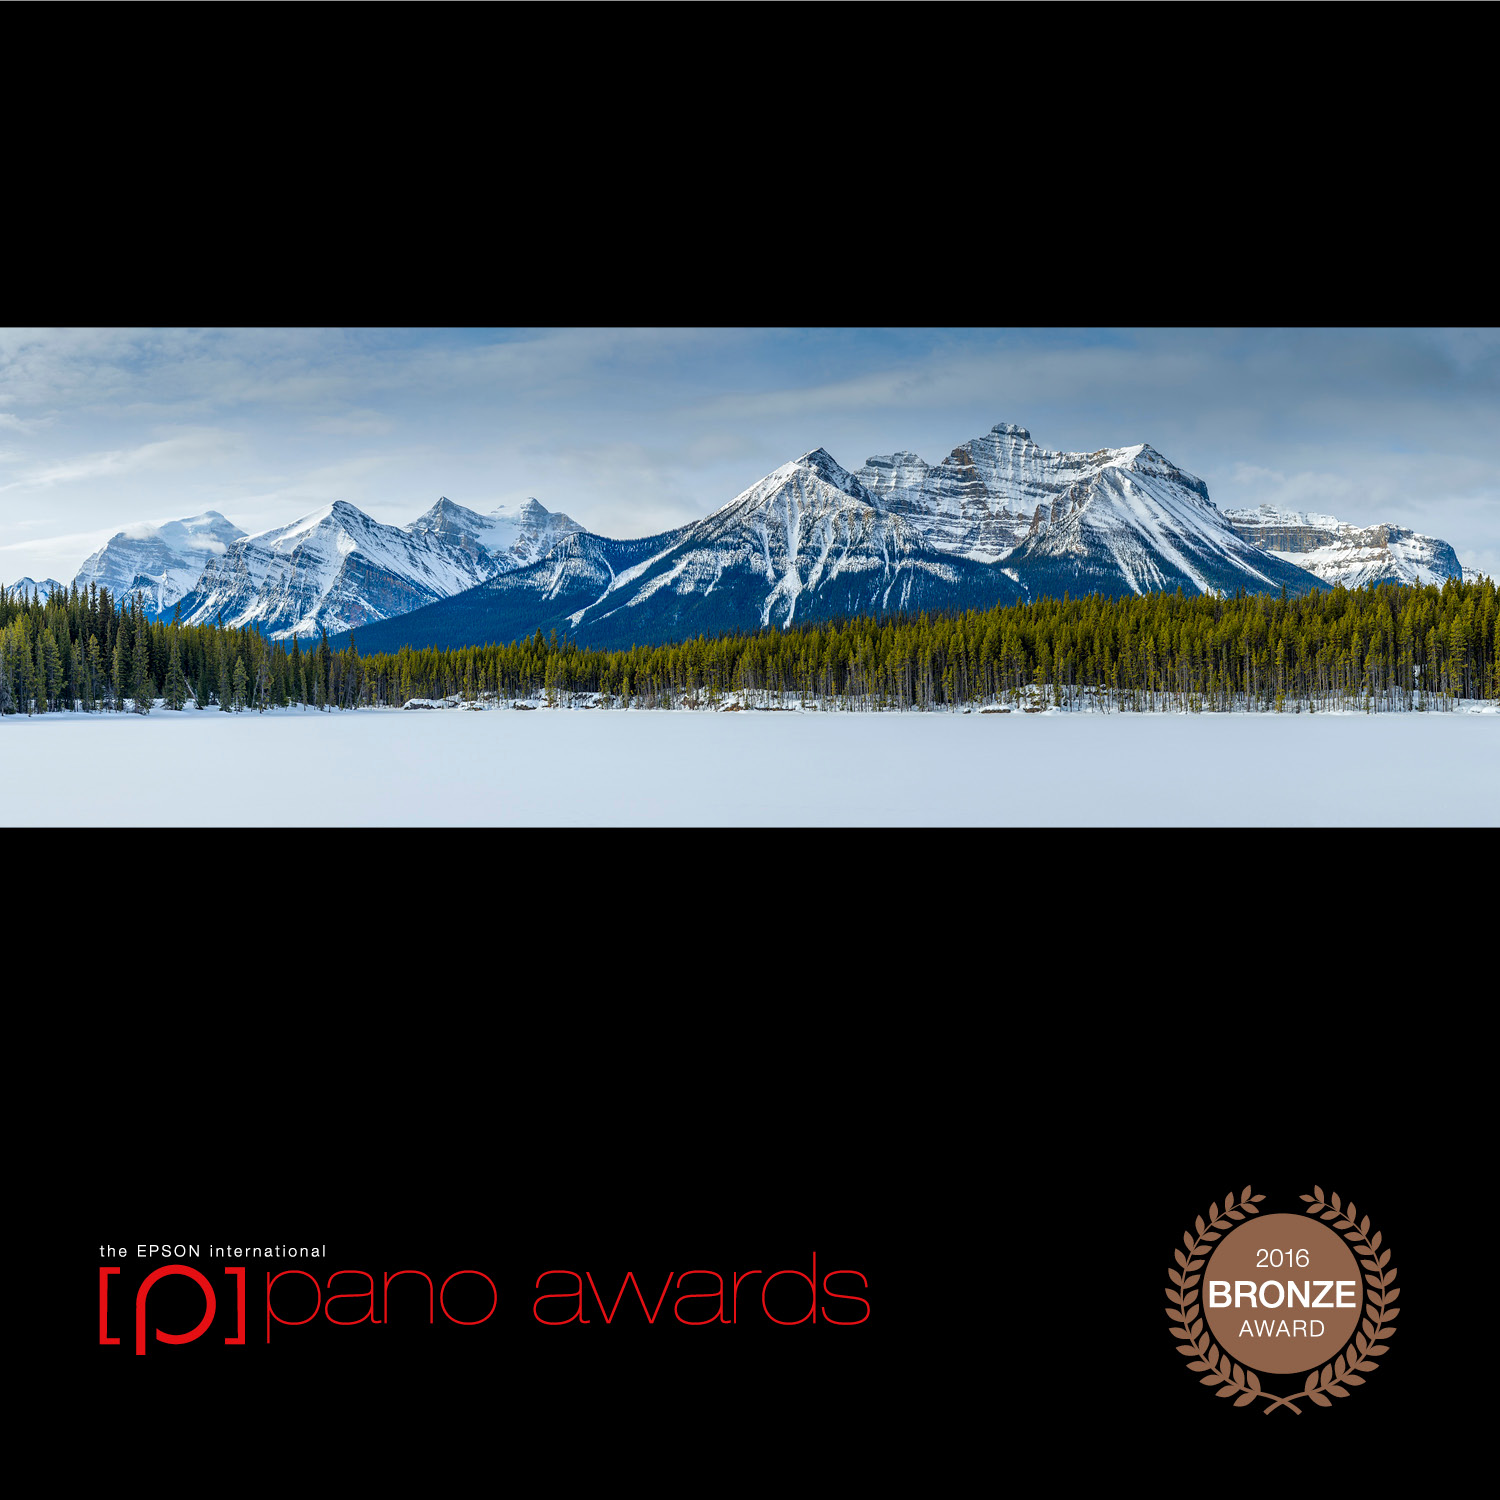 Daniel_Namdari-Pano-Awards-Open-Bronze-957.jpg